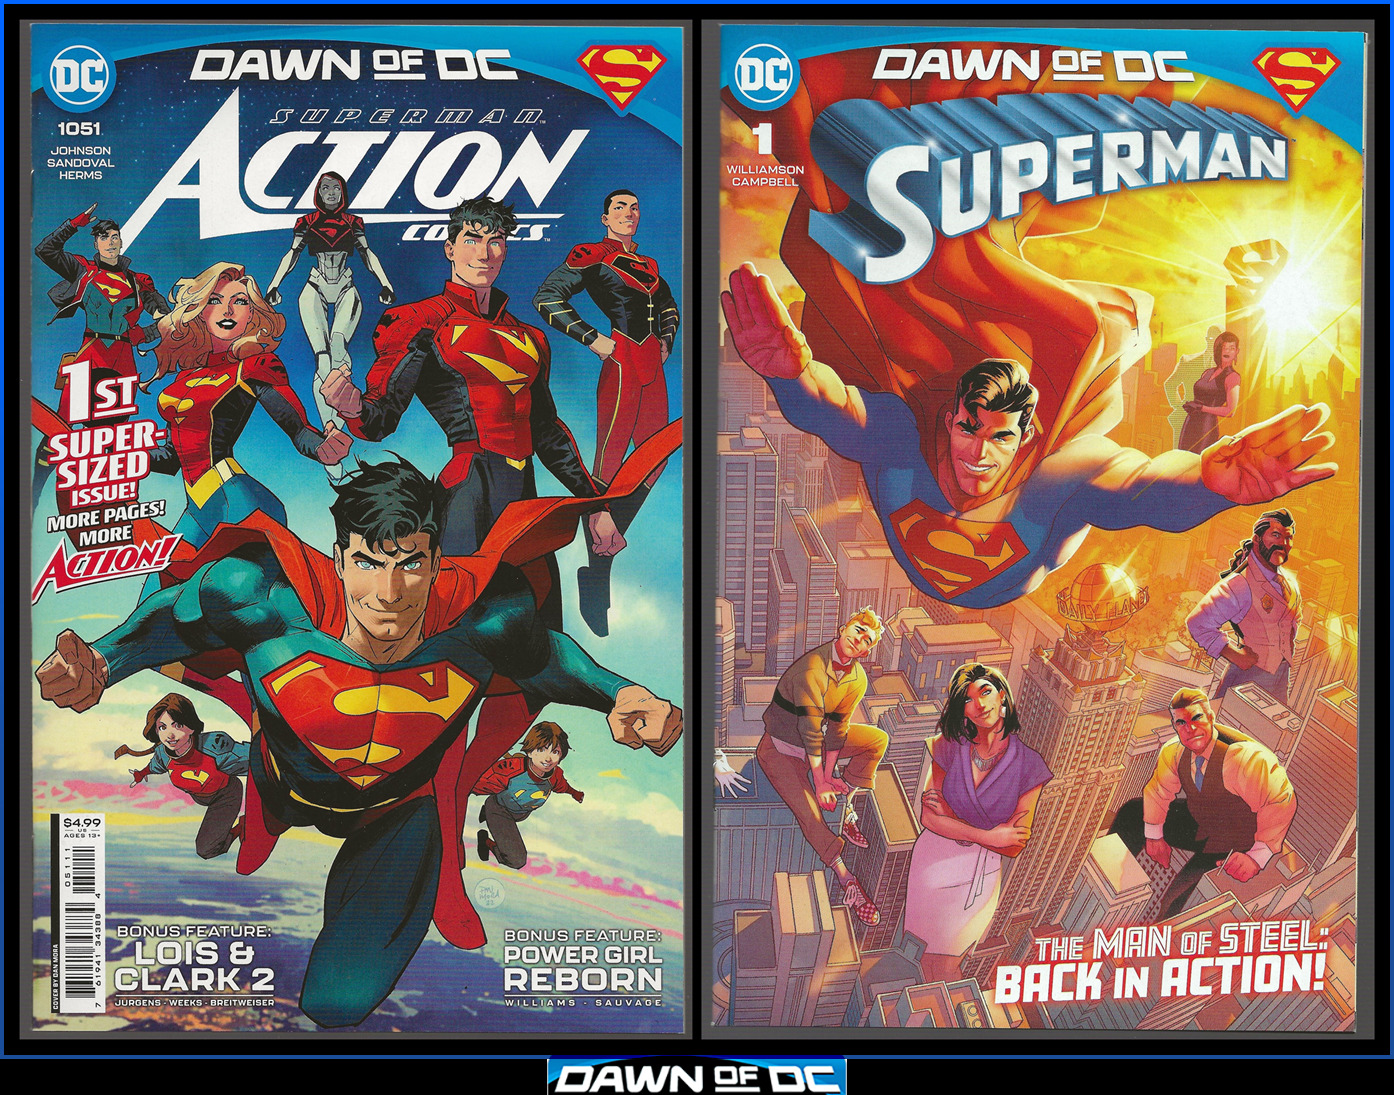 ACTION COMICS #1051 SUPERMAN #1 (2023) MAIN CVR SET DAWN OF DC JAMES GUNN 9.4 NM